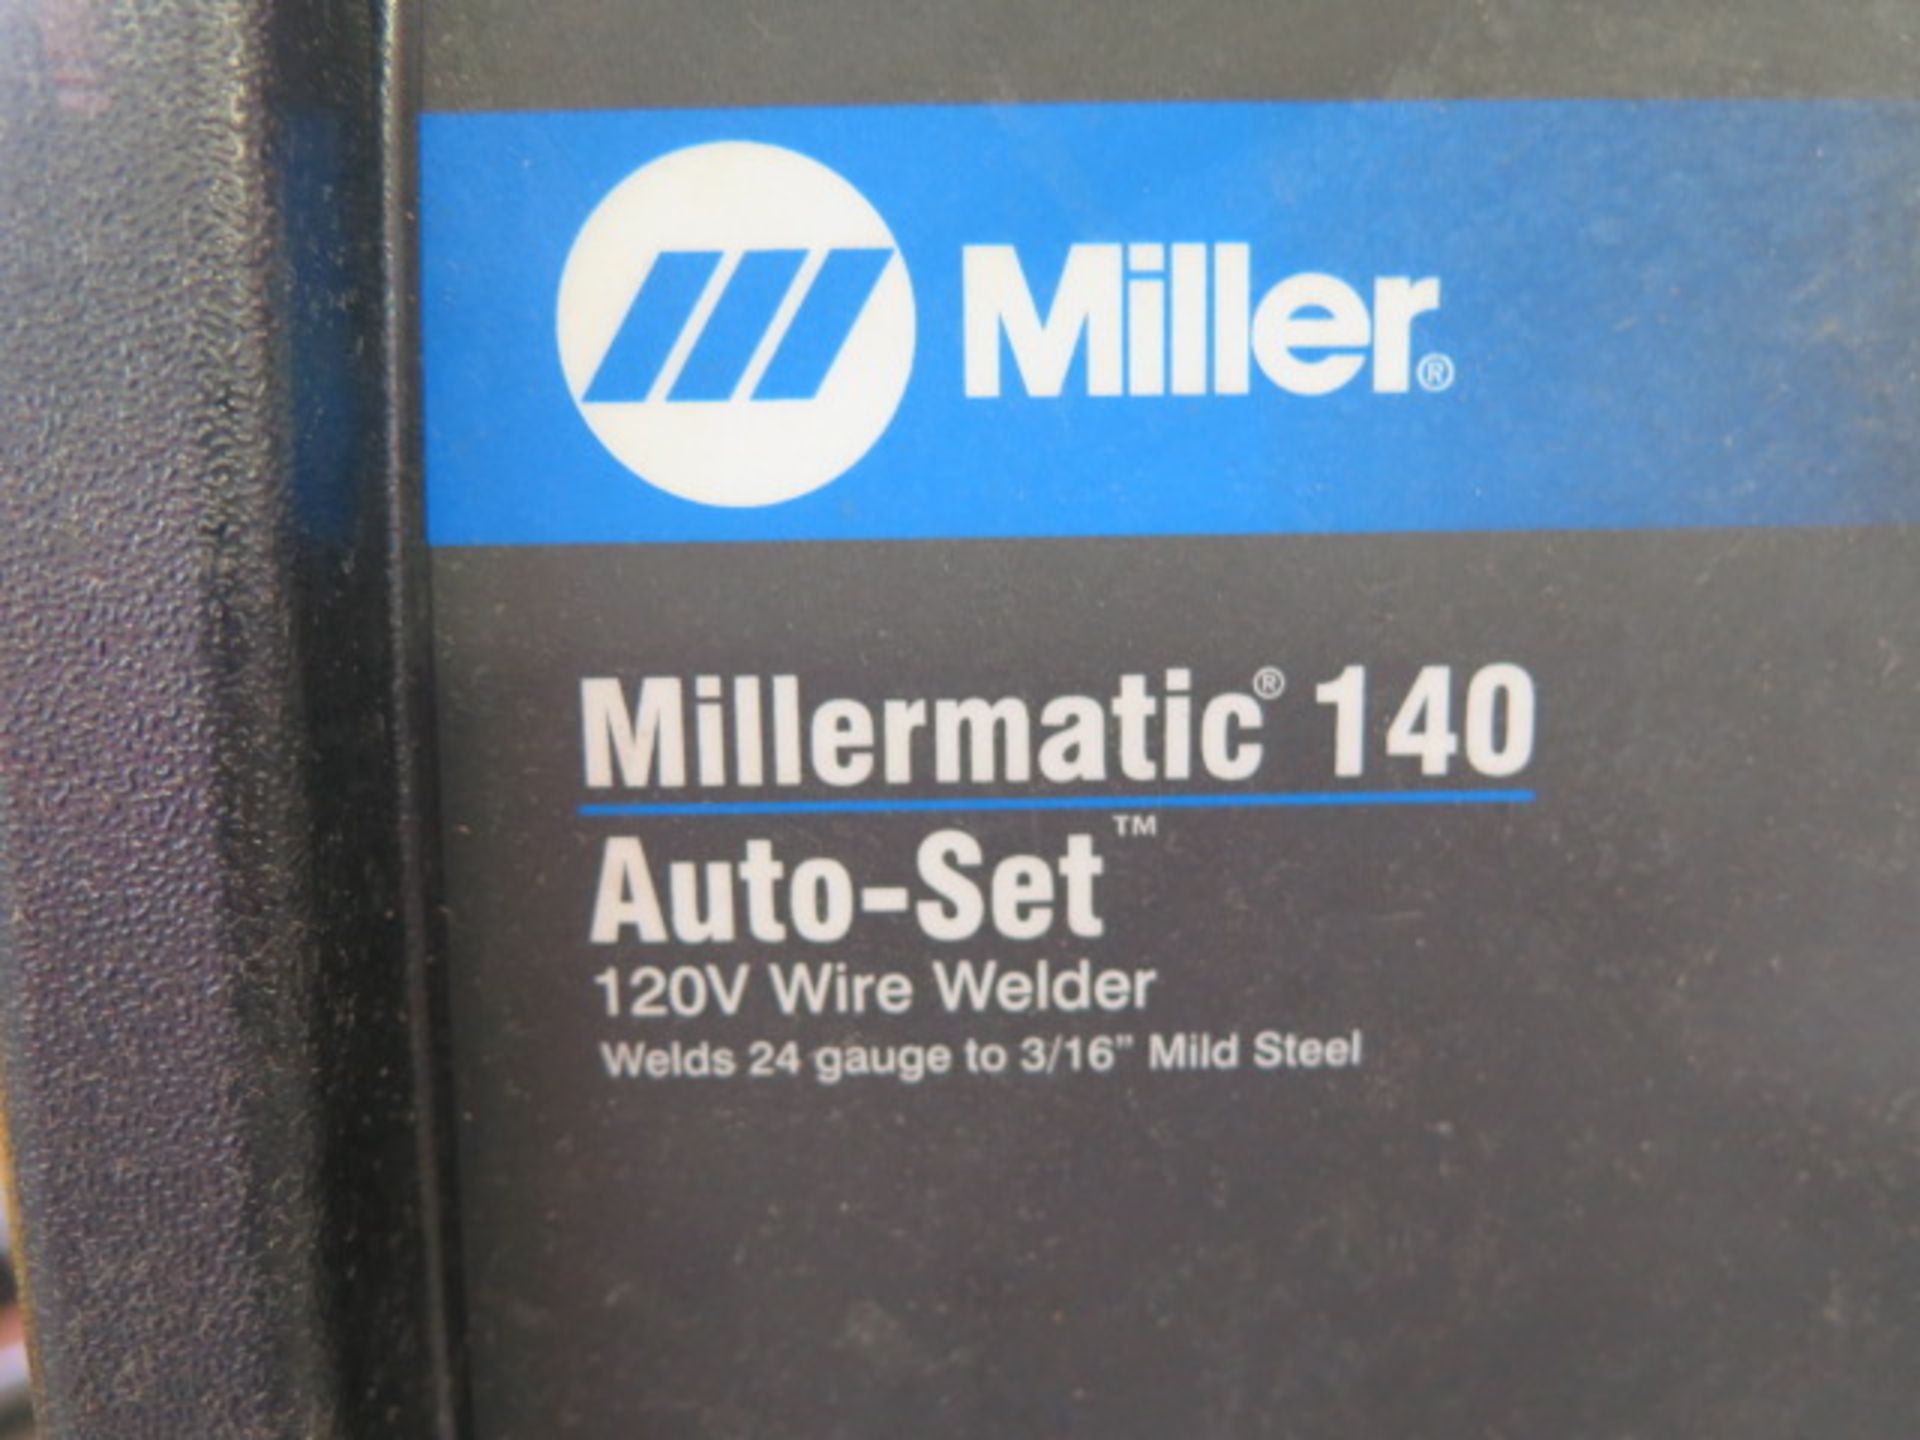 Miller Millermatic 140 Auto-Set 120 Volt Arc Welding Power Source s/n MC180735N - Image 5 of 5